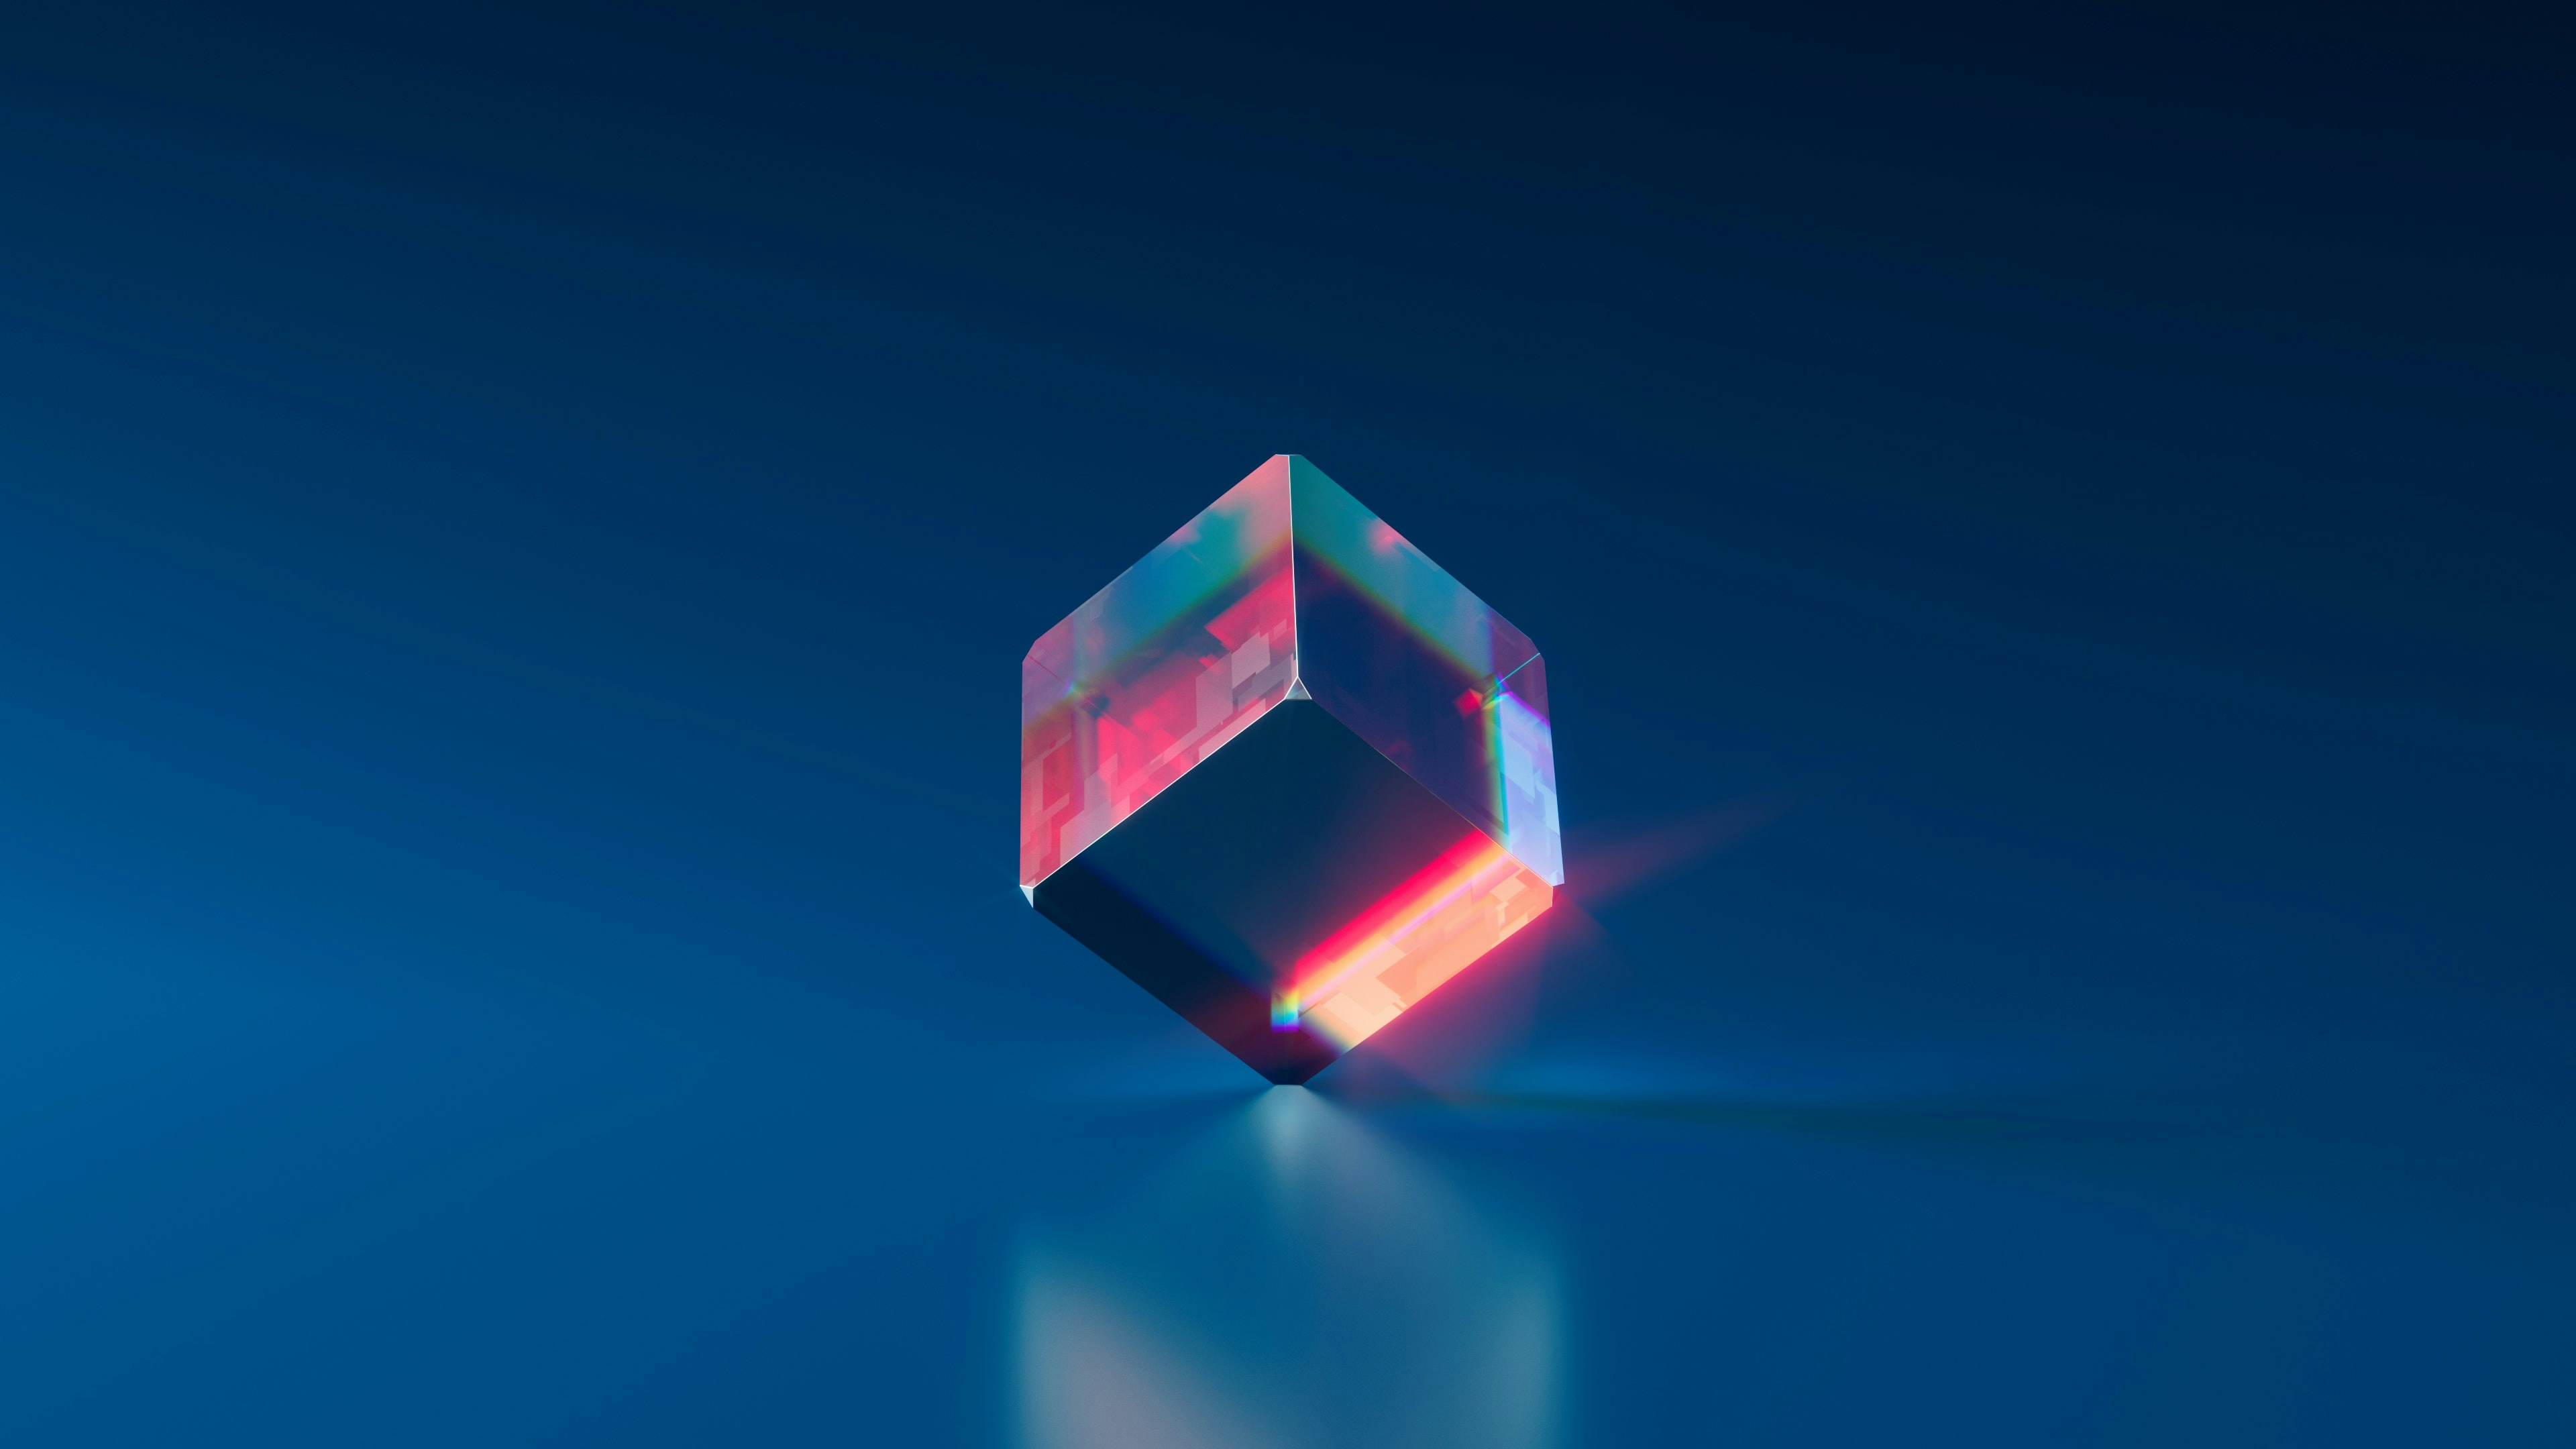 Purple and Pink Diamond on Blue Background by Rostislav Uzunov on Pexels